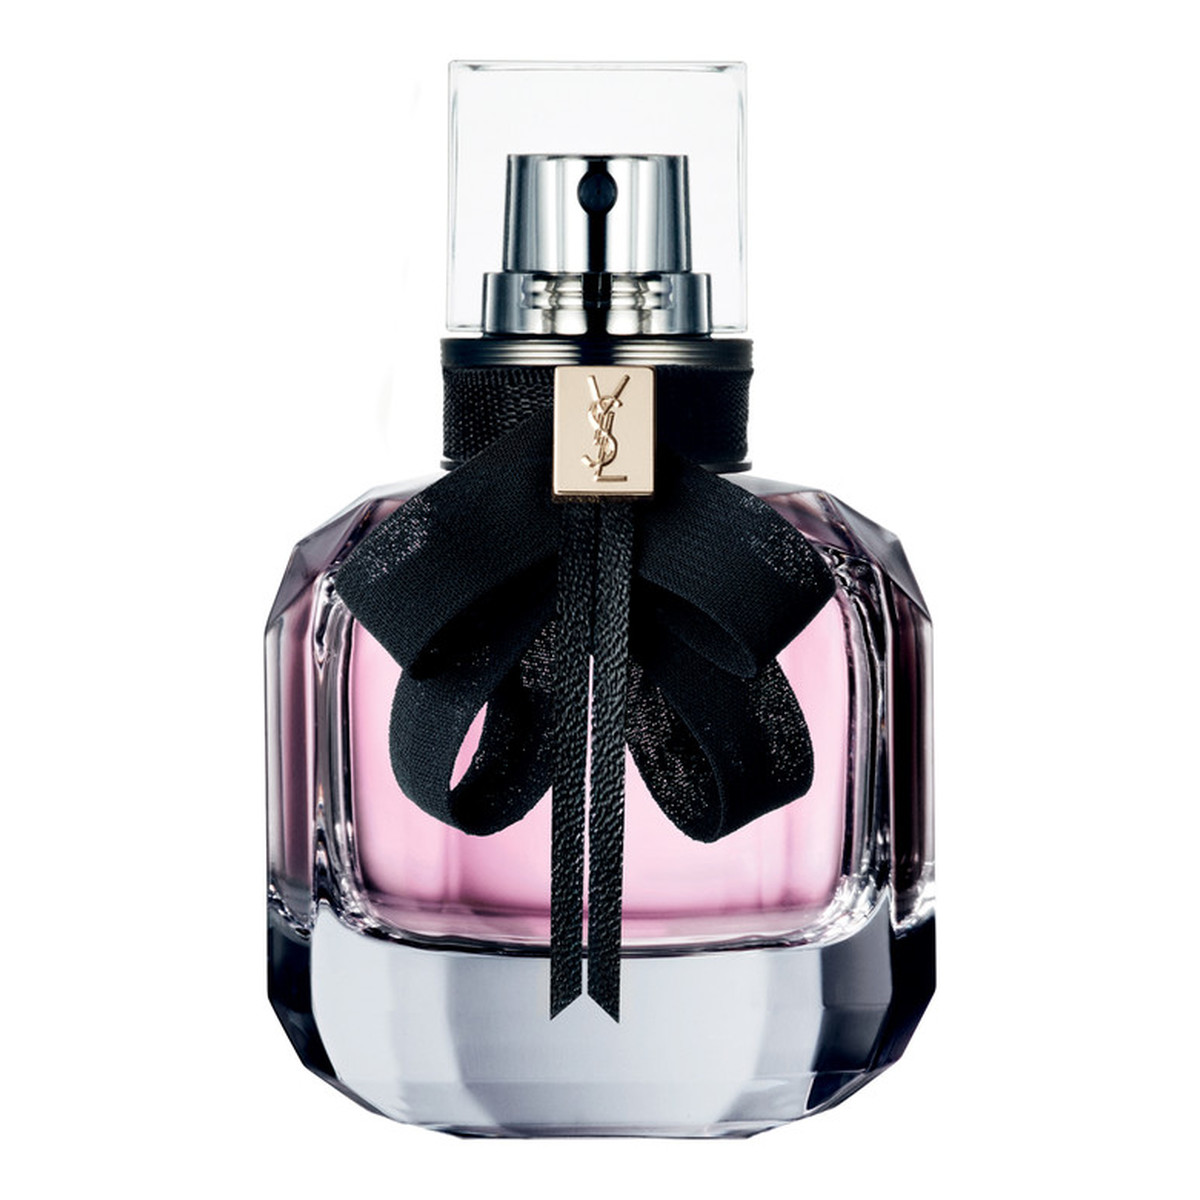 Yves Saint Laurent Mon Paris Woda perfumowana dla kobiet 30ml